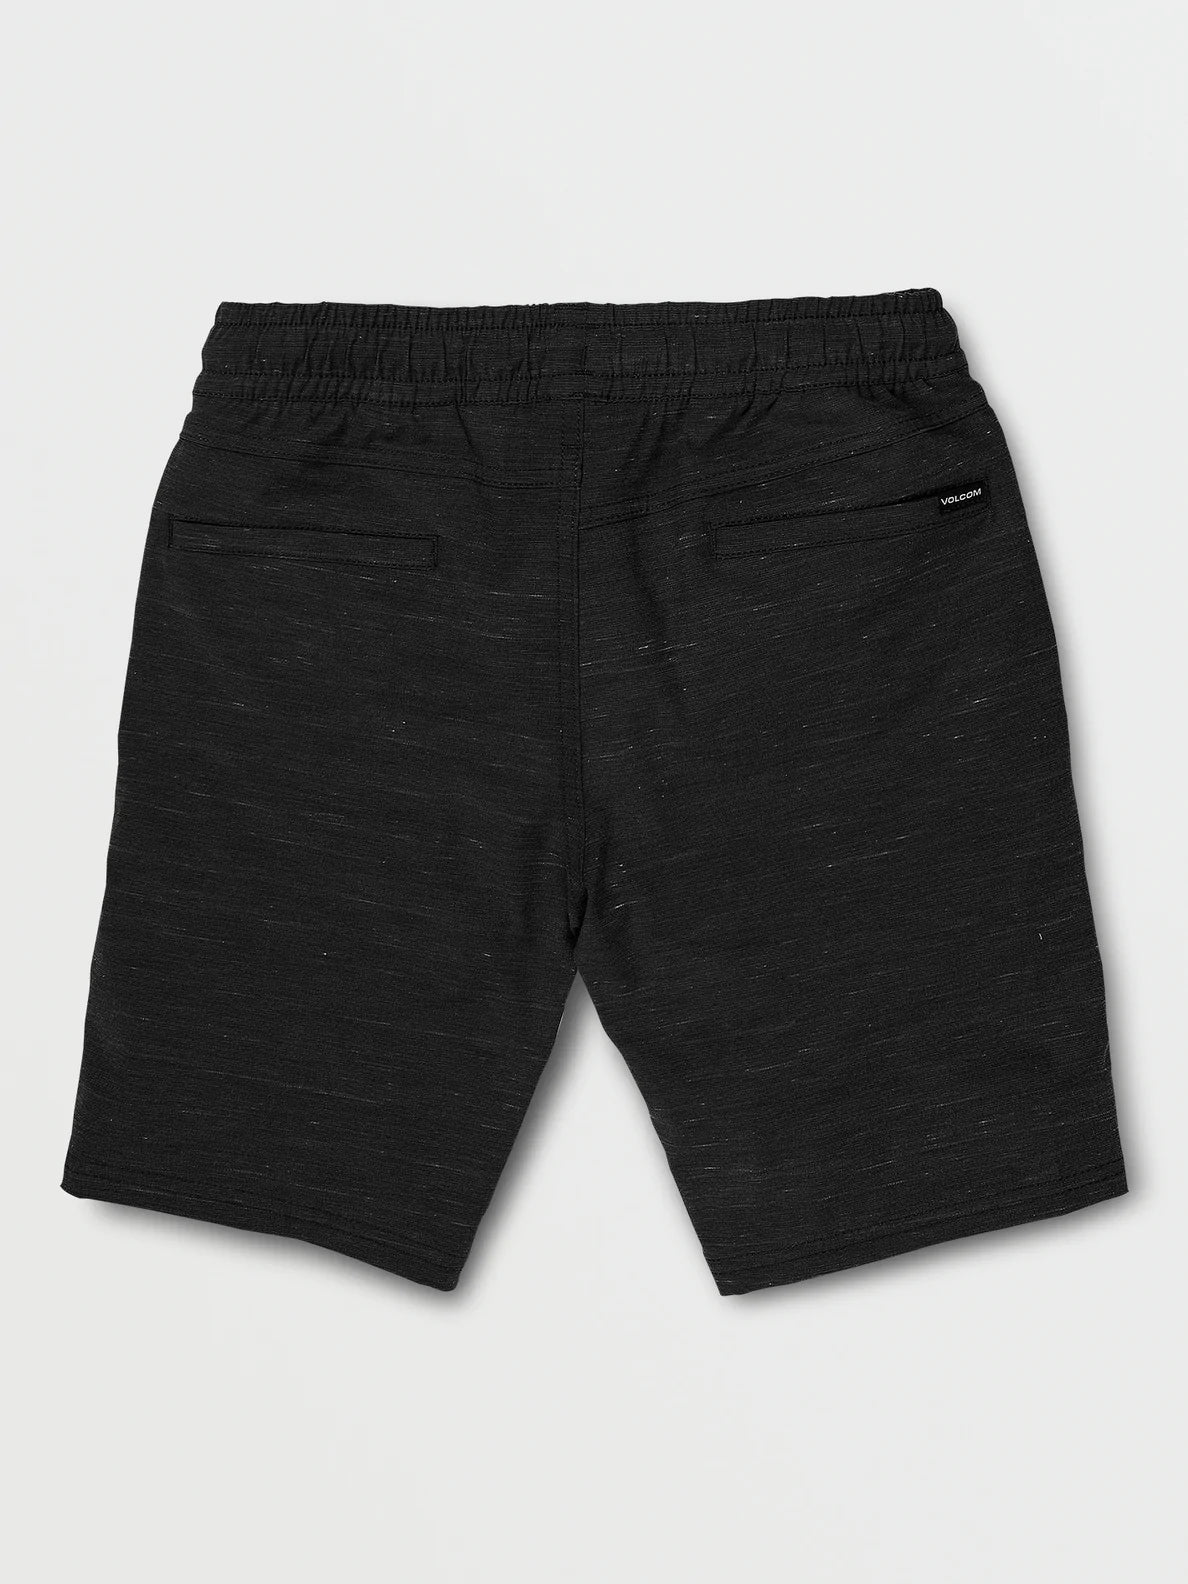 Volcom Understoned Hybrid Elastic Shorts - Black Mens Shorts